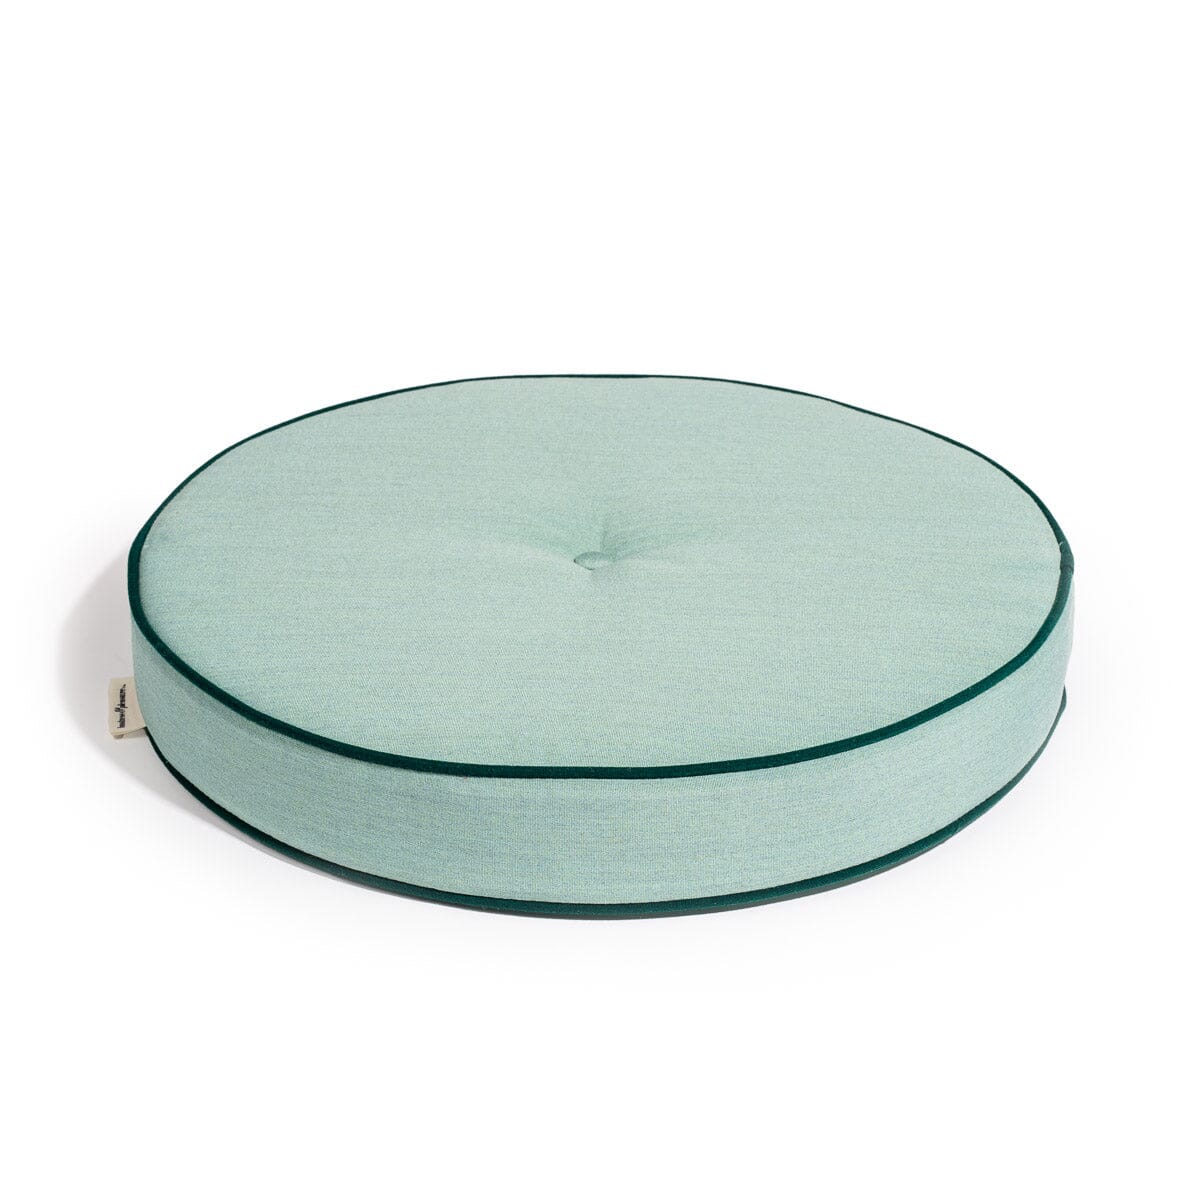 The Circular Pillow - Rivie Green Circular Pillow Business & Pleasure Co 